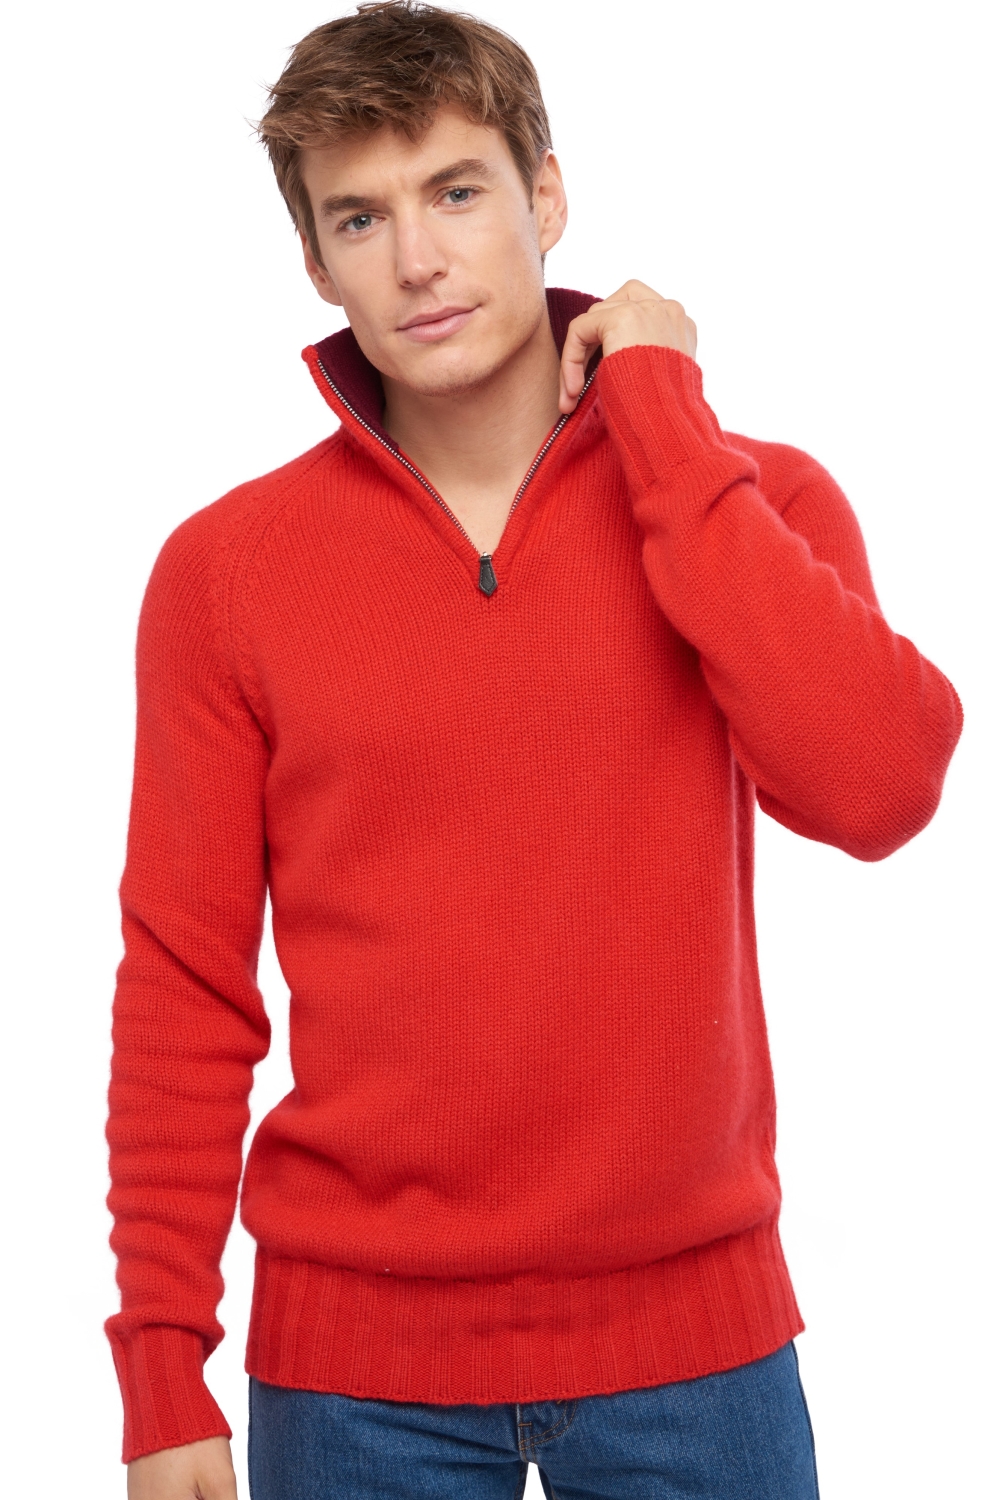 Cashmere men polo style sweaters olivier rouge bordeaux 2xl